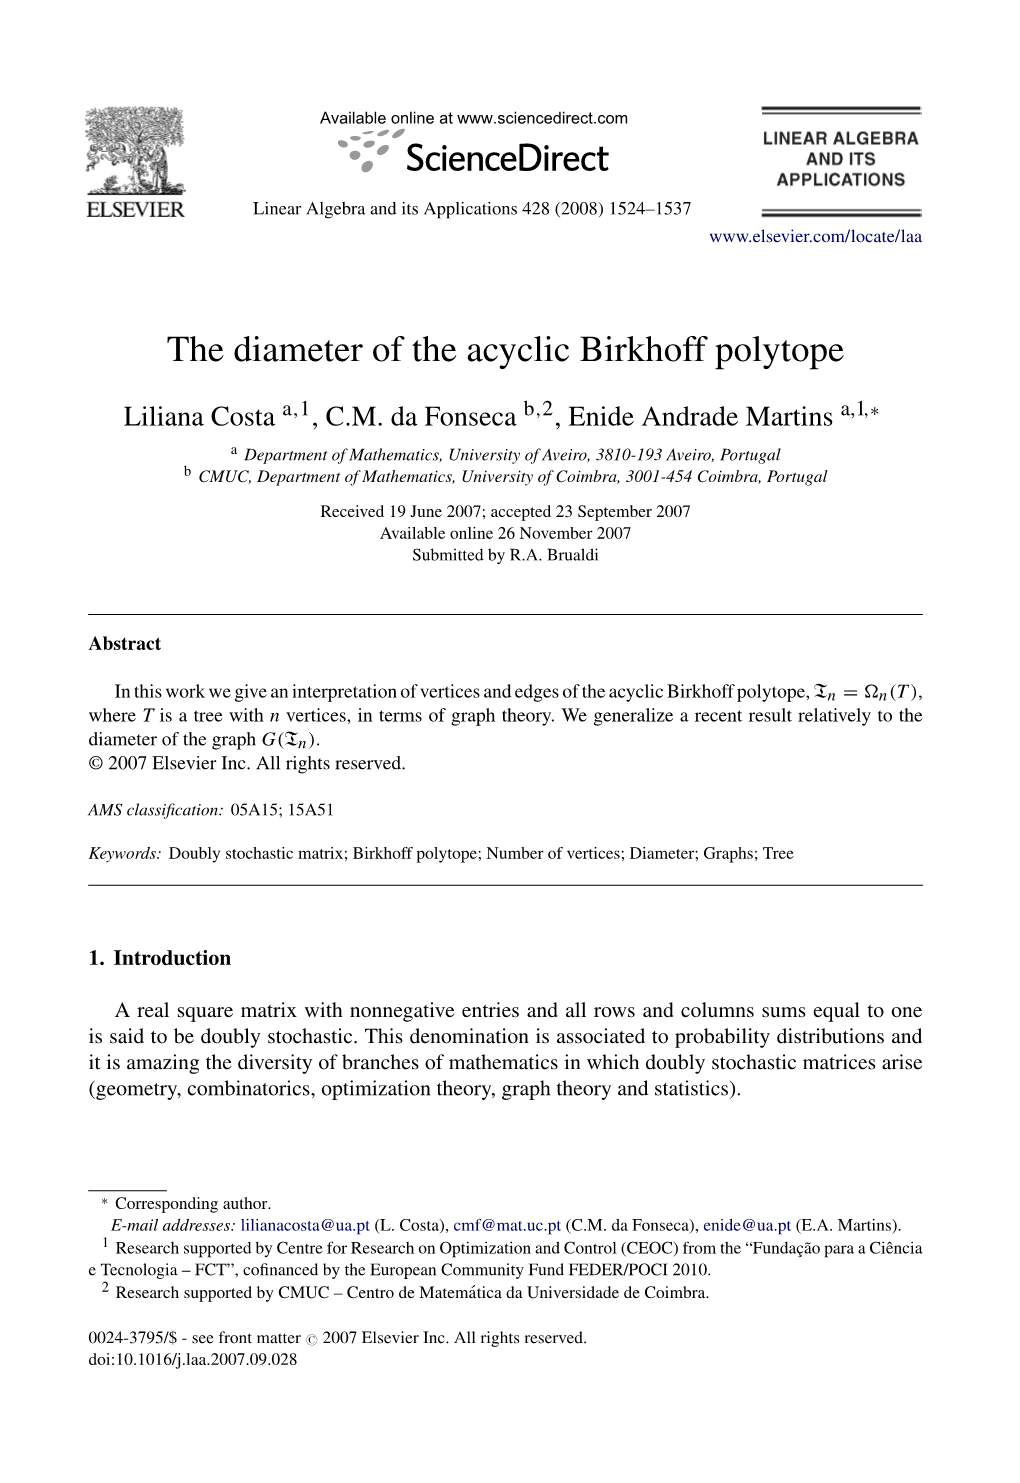 The Diameter of the Acyclic Birkhoff Polytope